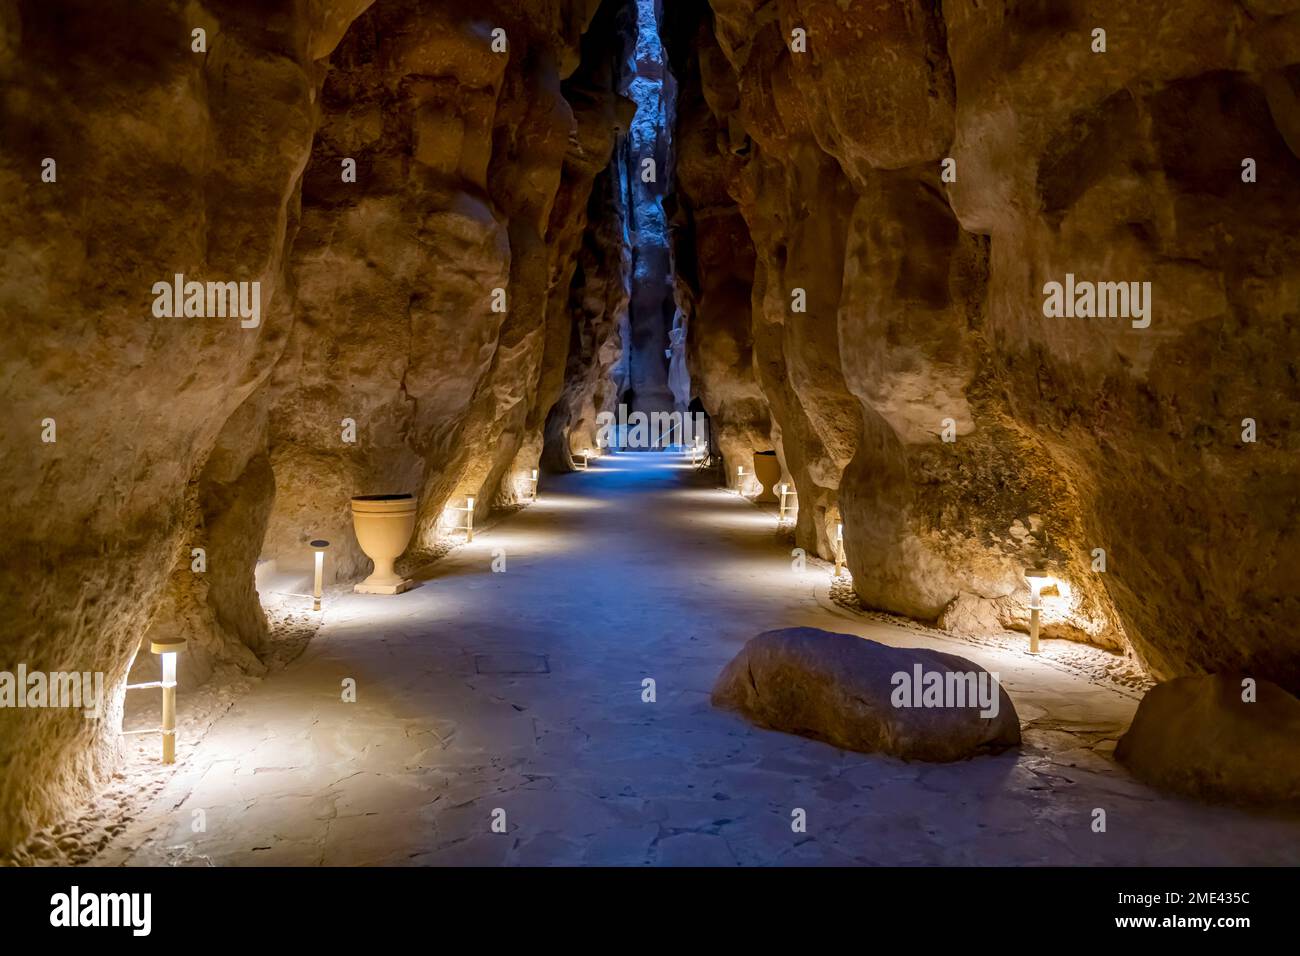 Saudi Arabia, Eastern Province, Al-Hofuf, Illuminated cave at Jabal Al-Qarah Stock Photo